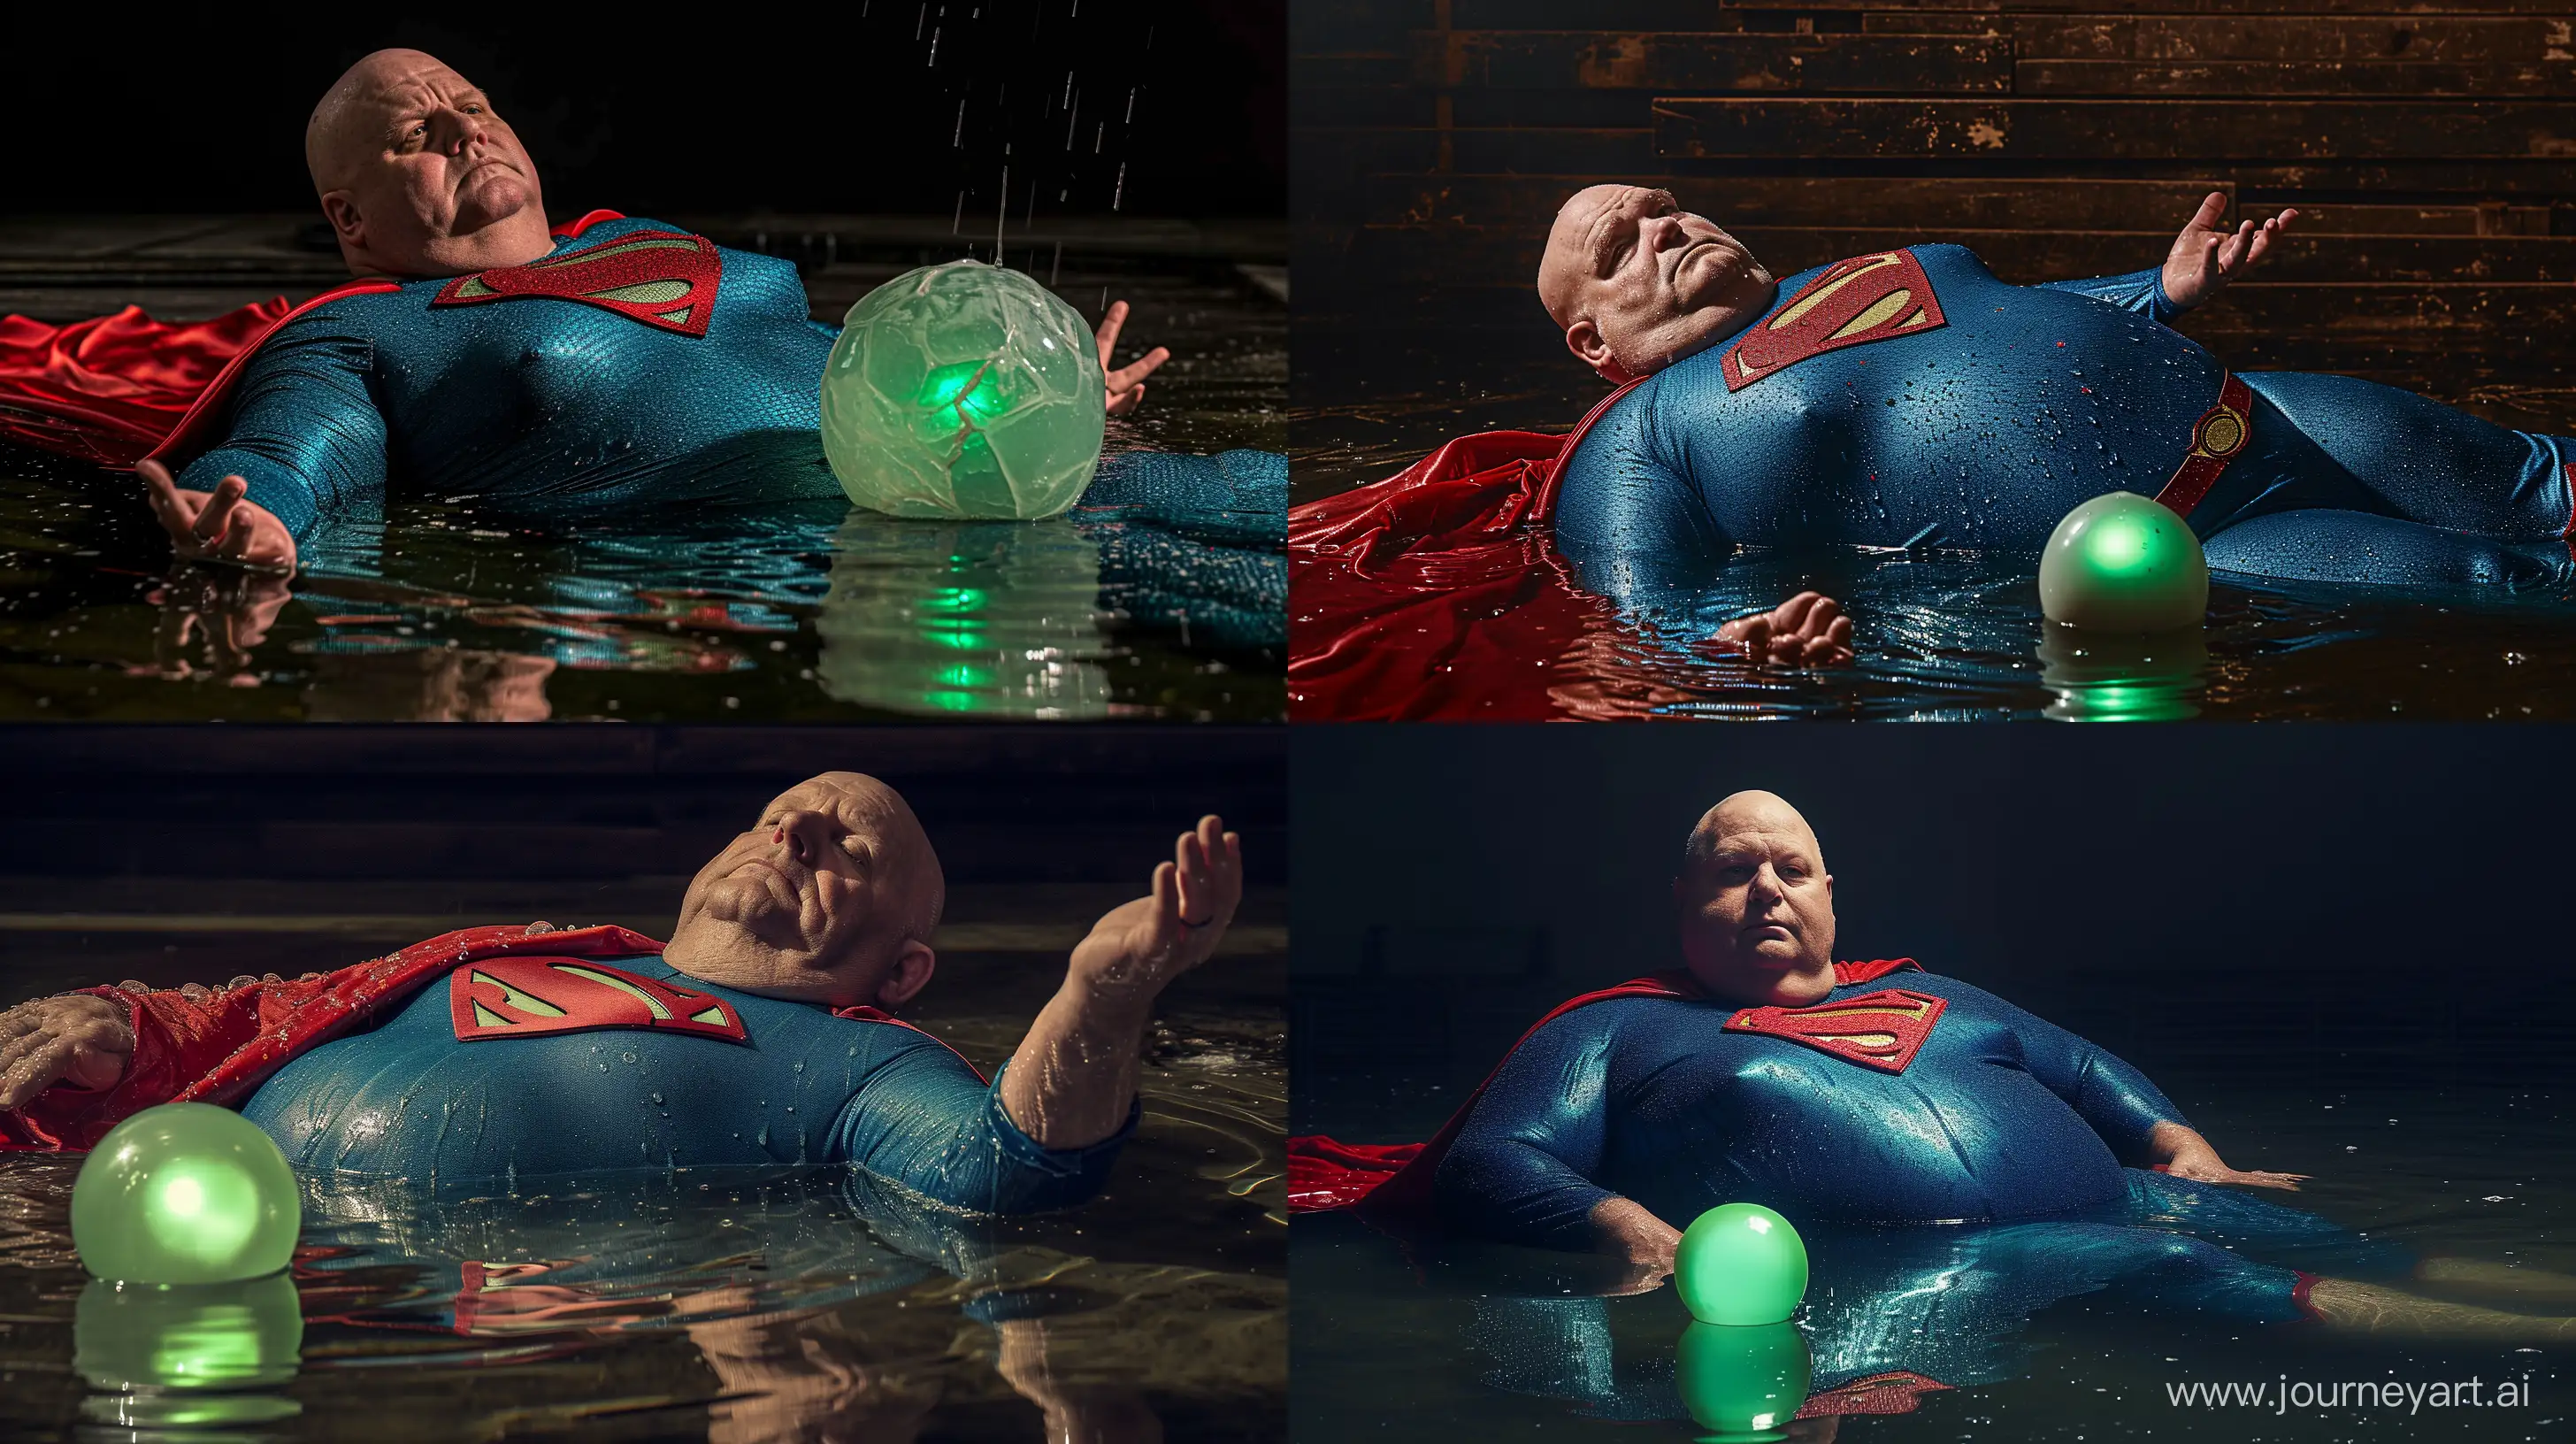 Elderly-Superman-Enjoys-a-Refreshing-Swim-with-Illuminated-Ball